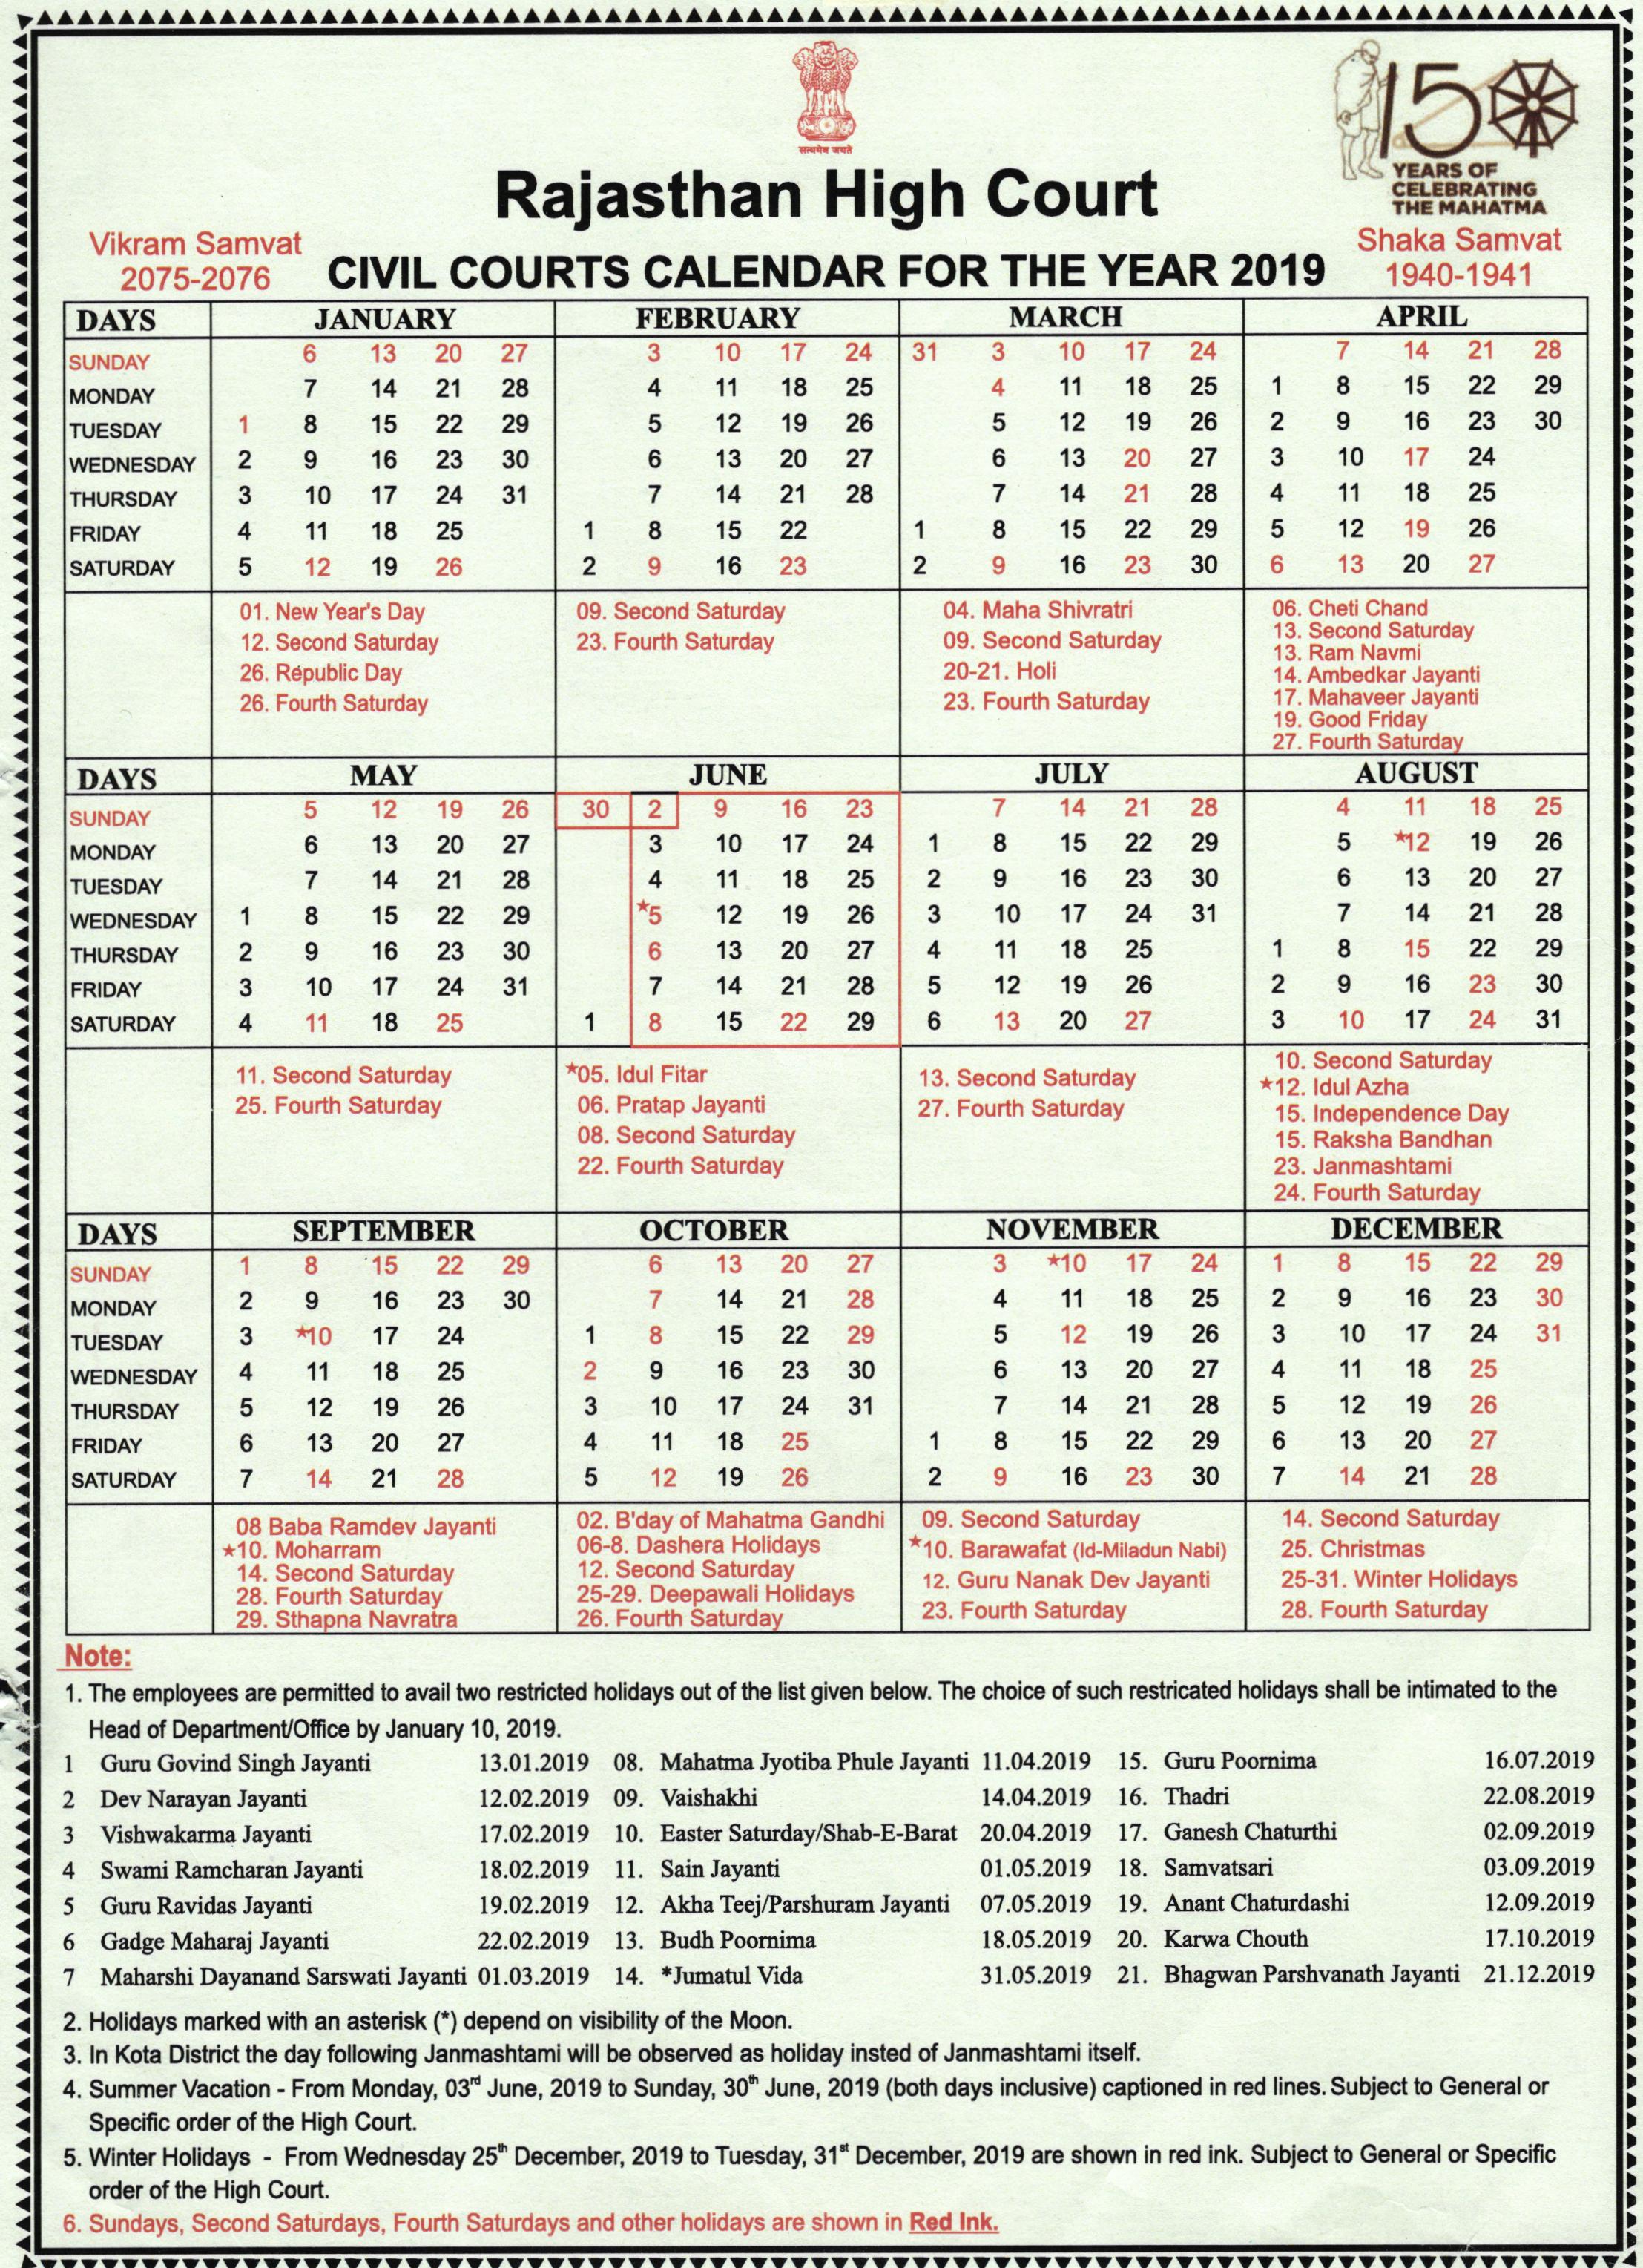 Rajasthan High Court (Civil Courts) Calendar 2019